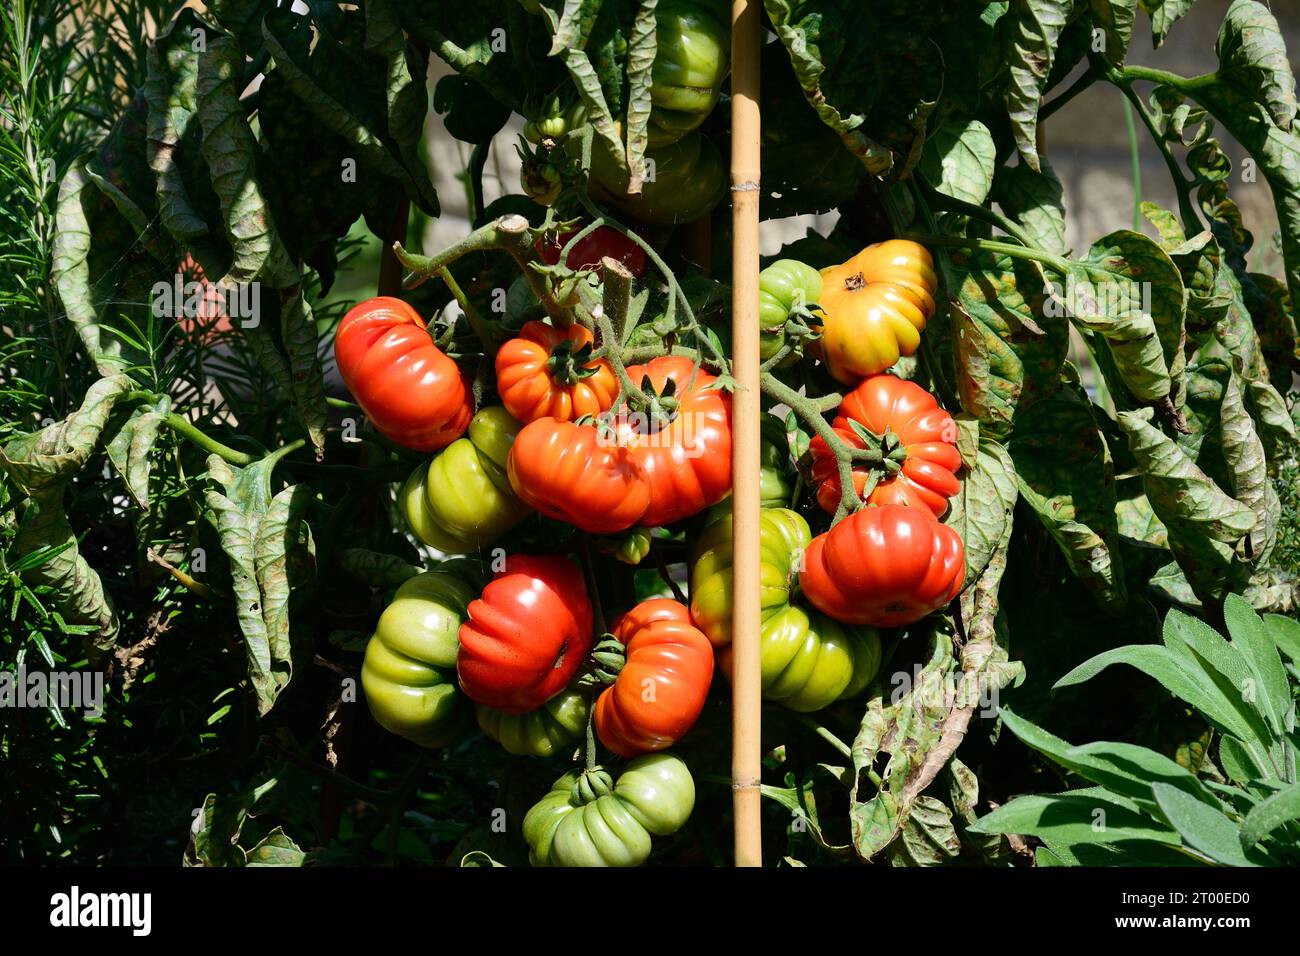 Costoluto Fiorentino tomatoes growing on the vine in a garden veg plot, UK, Europe, Stock Photo